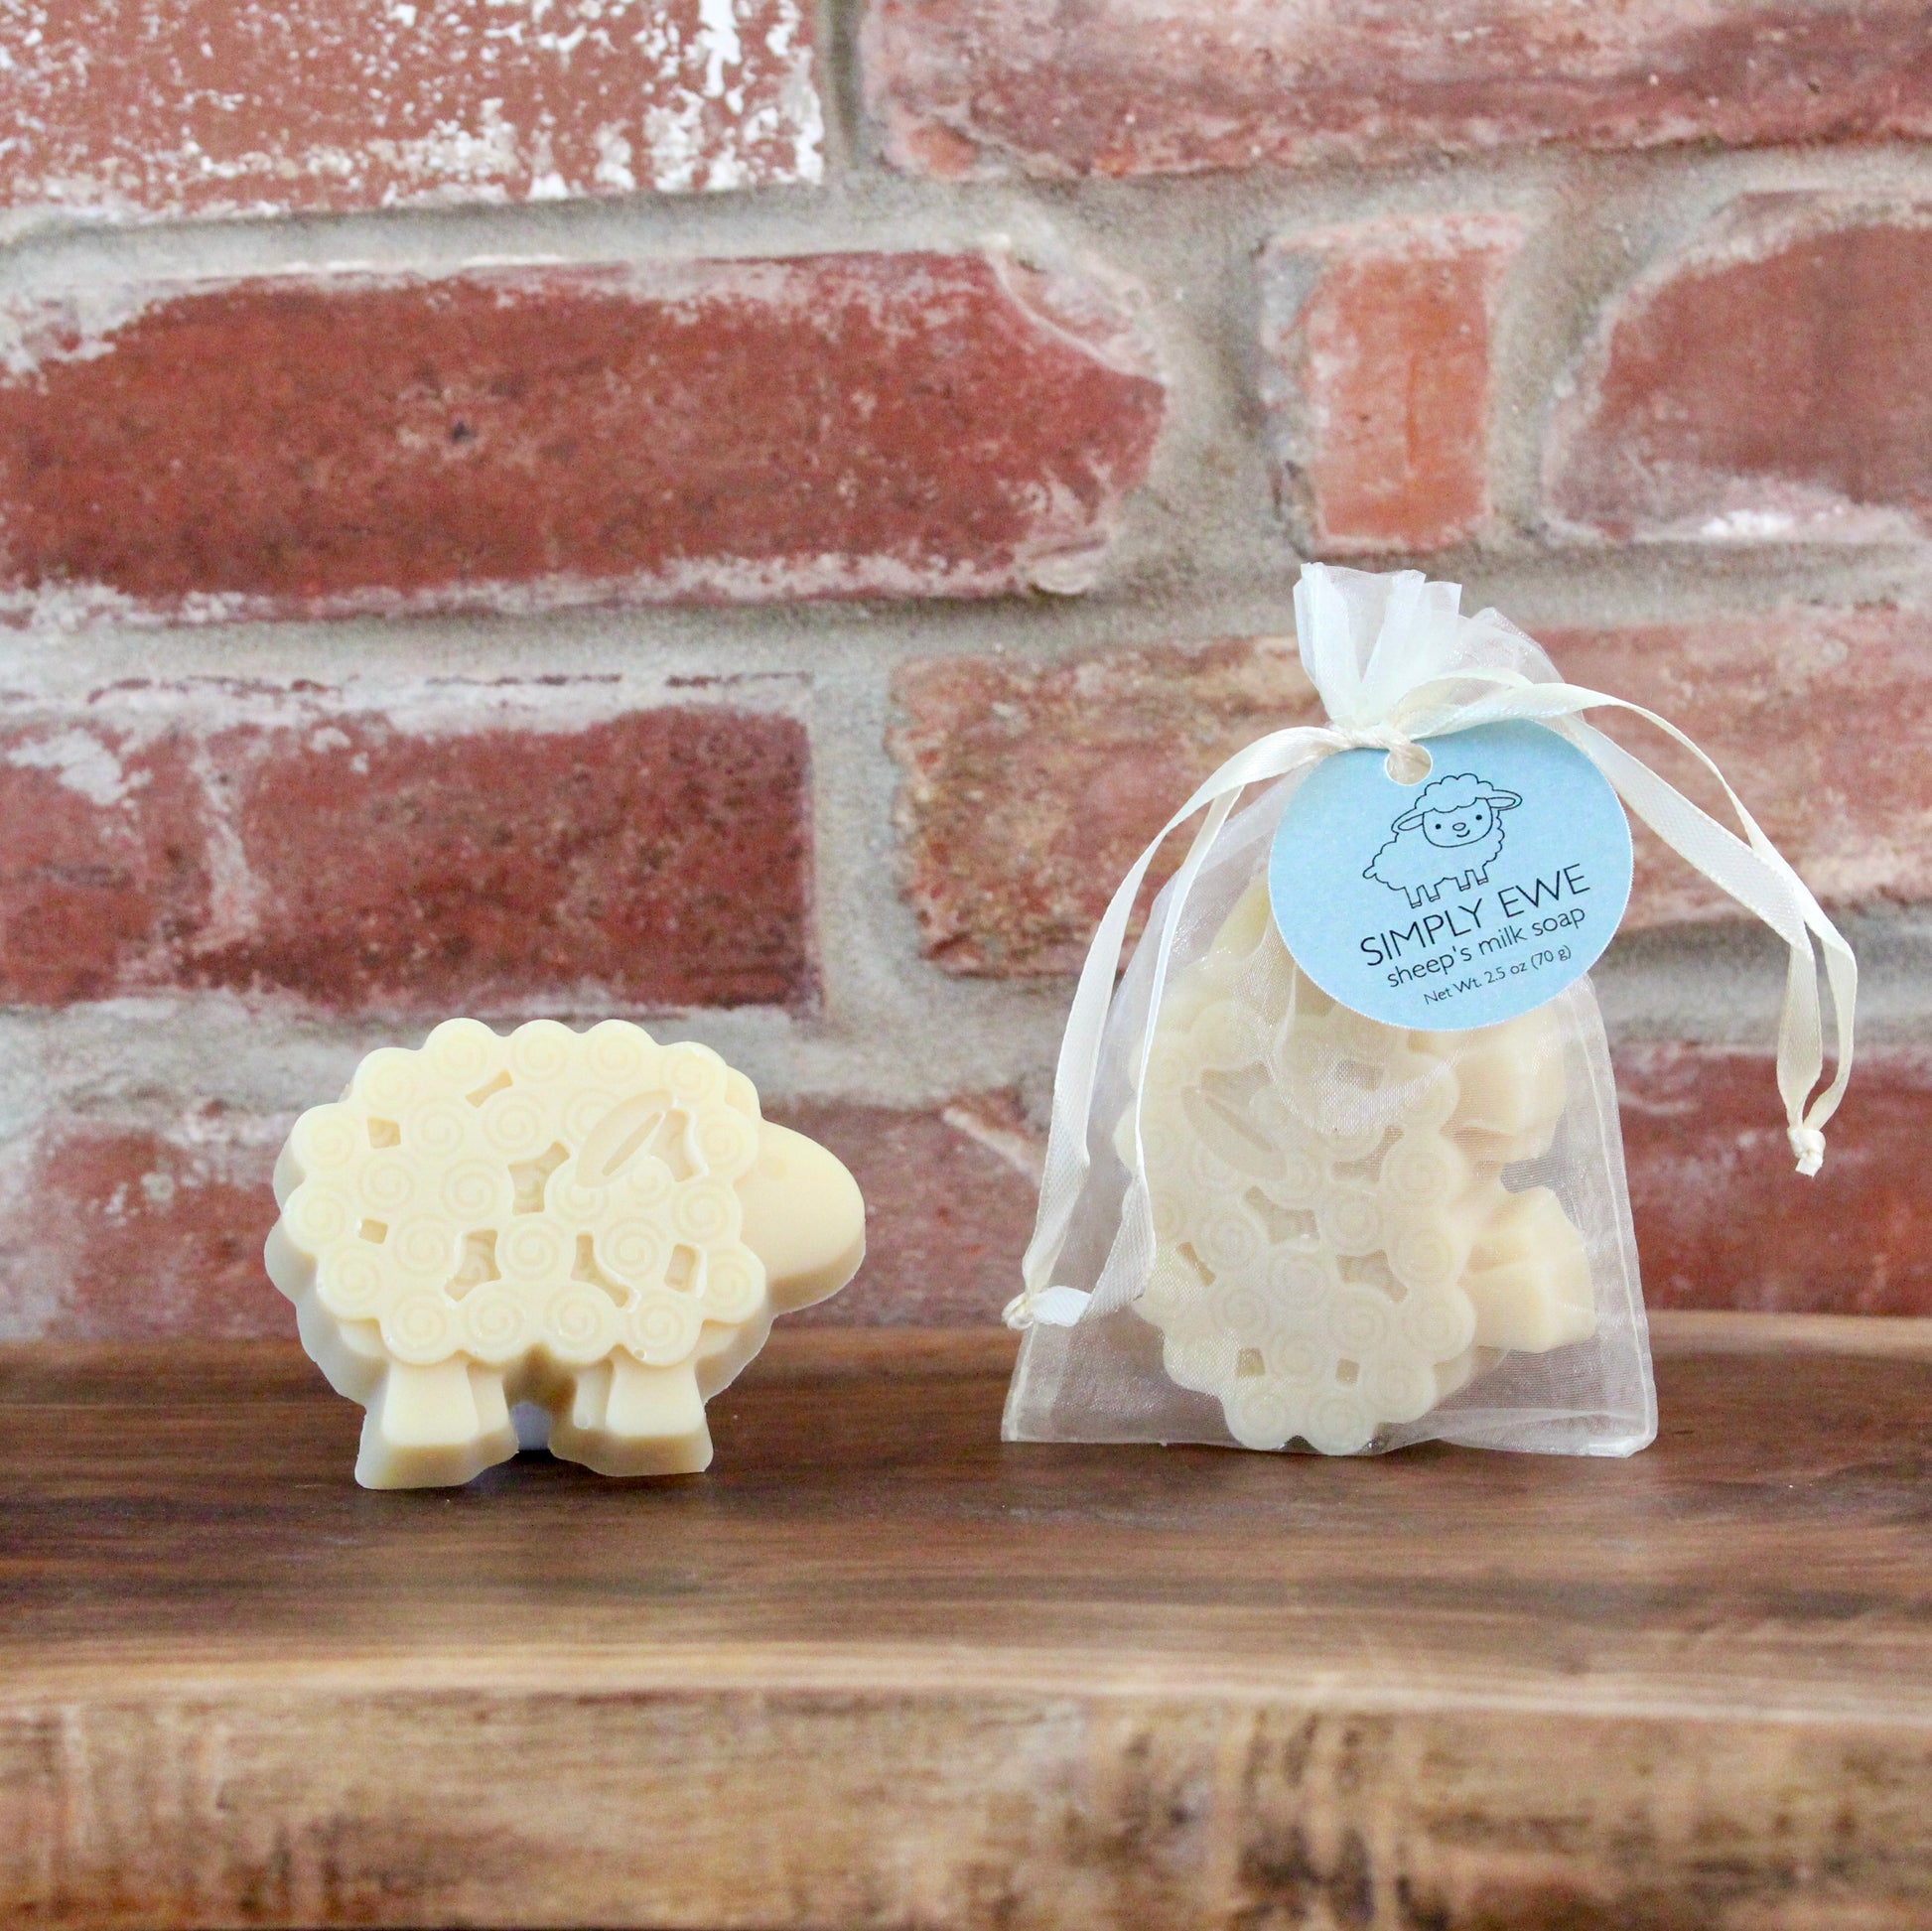 Sheep-shaped Simply Ewe sheep's milk soap.